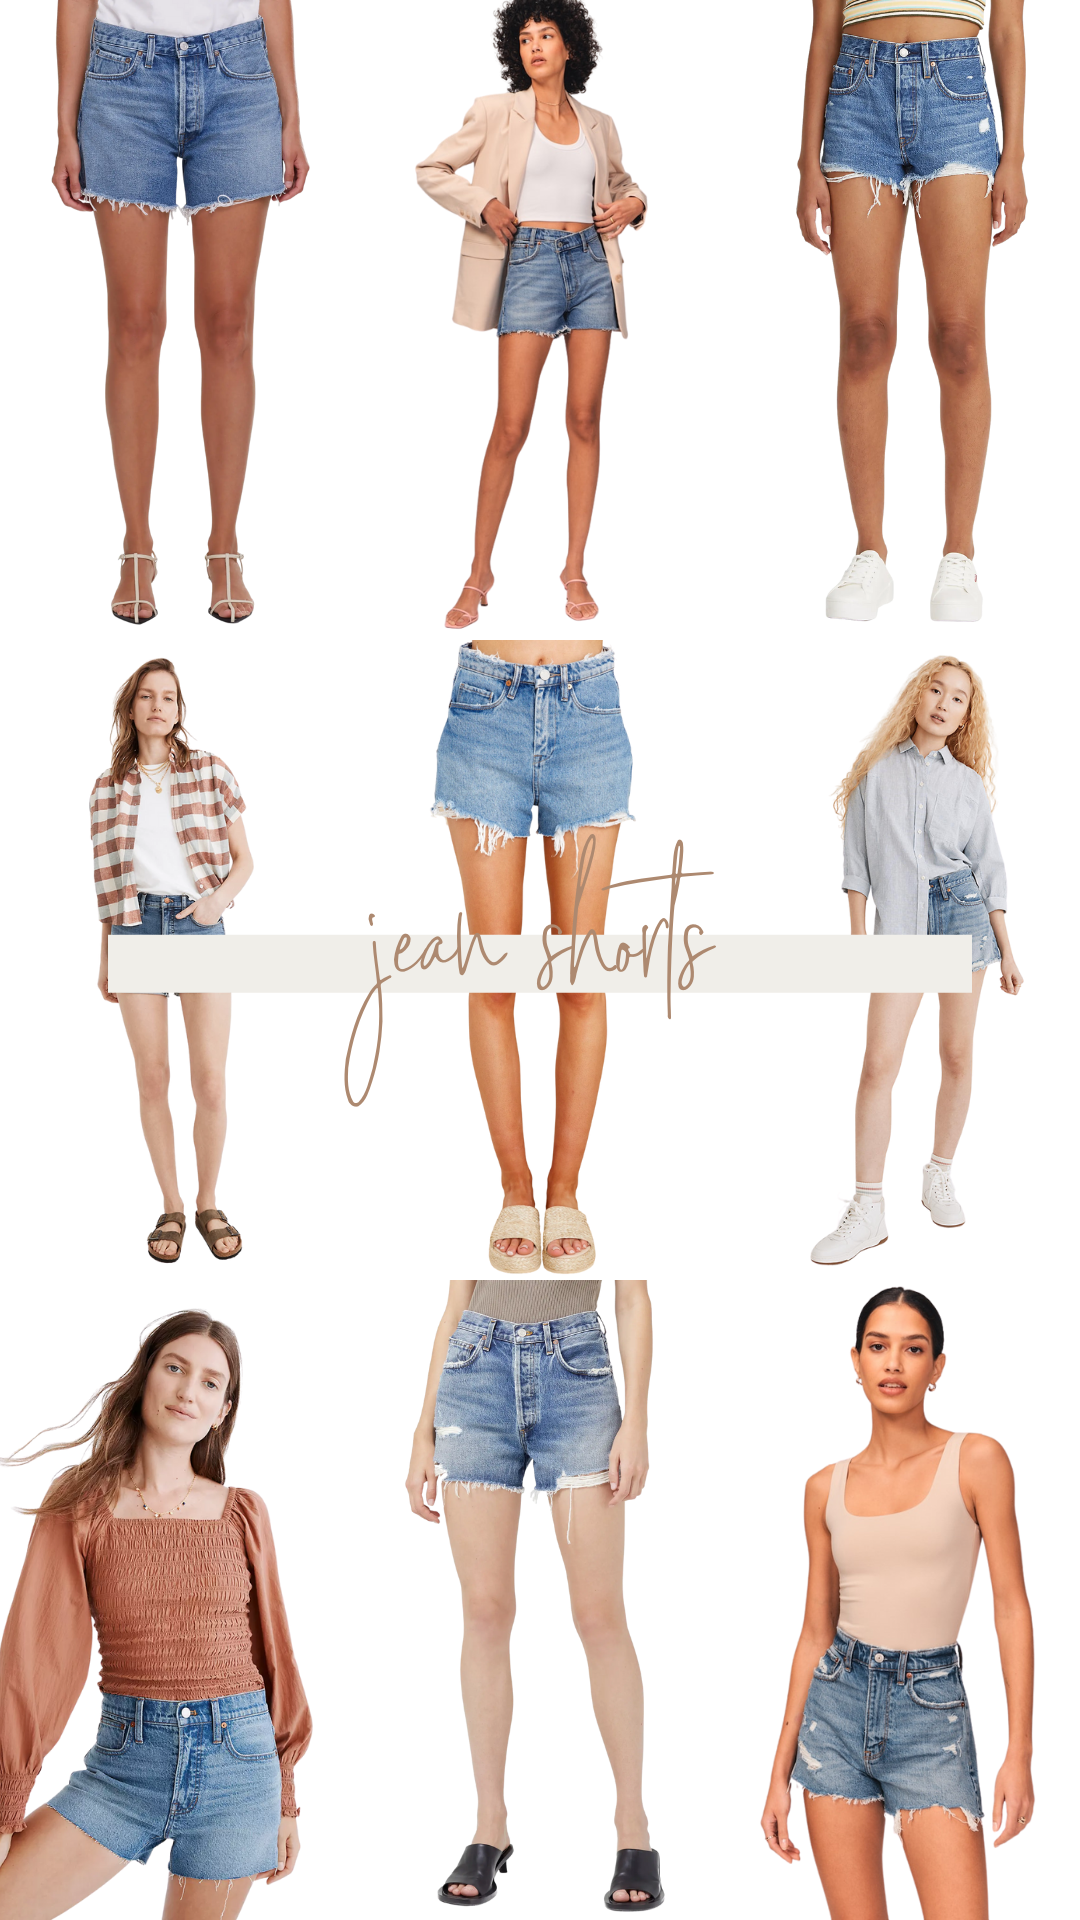 jean shorts